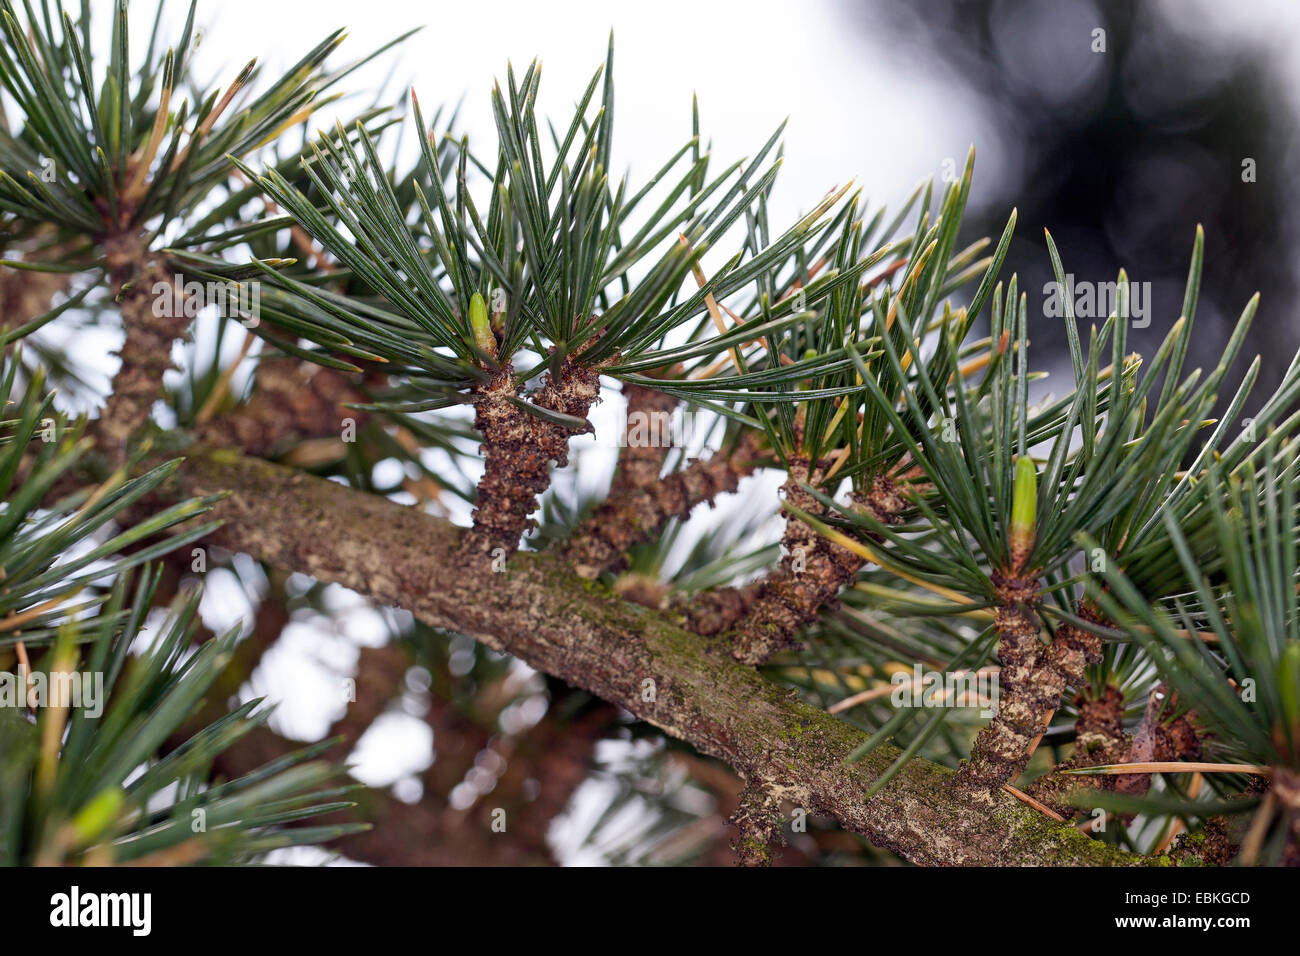 Cedar of Lebanon, Lebanon cedar (Cedrus libani, Cedrus libanotica), long shoot with short shoots Stock Photo